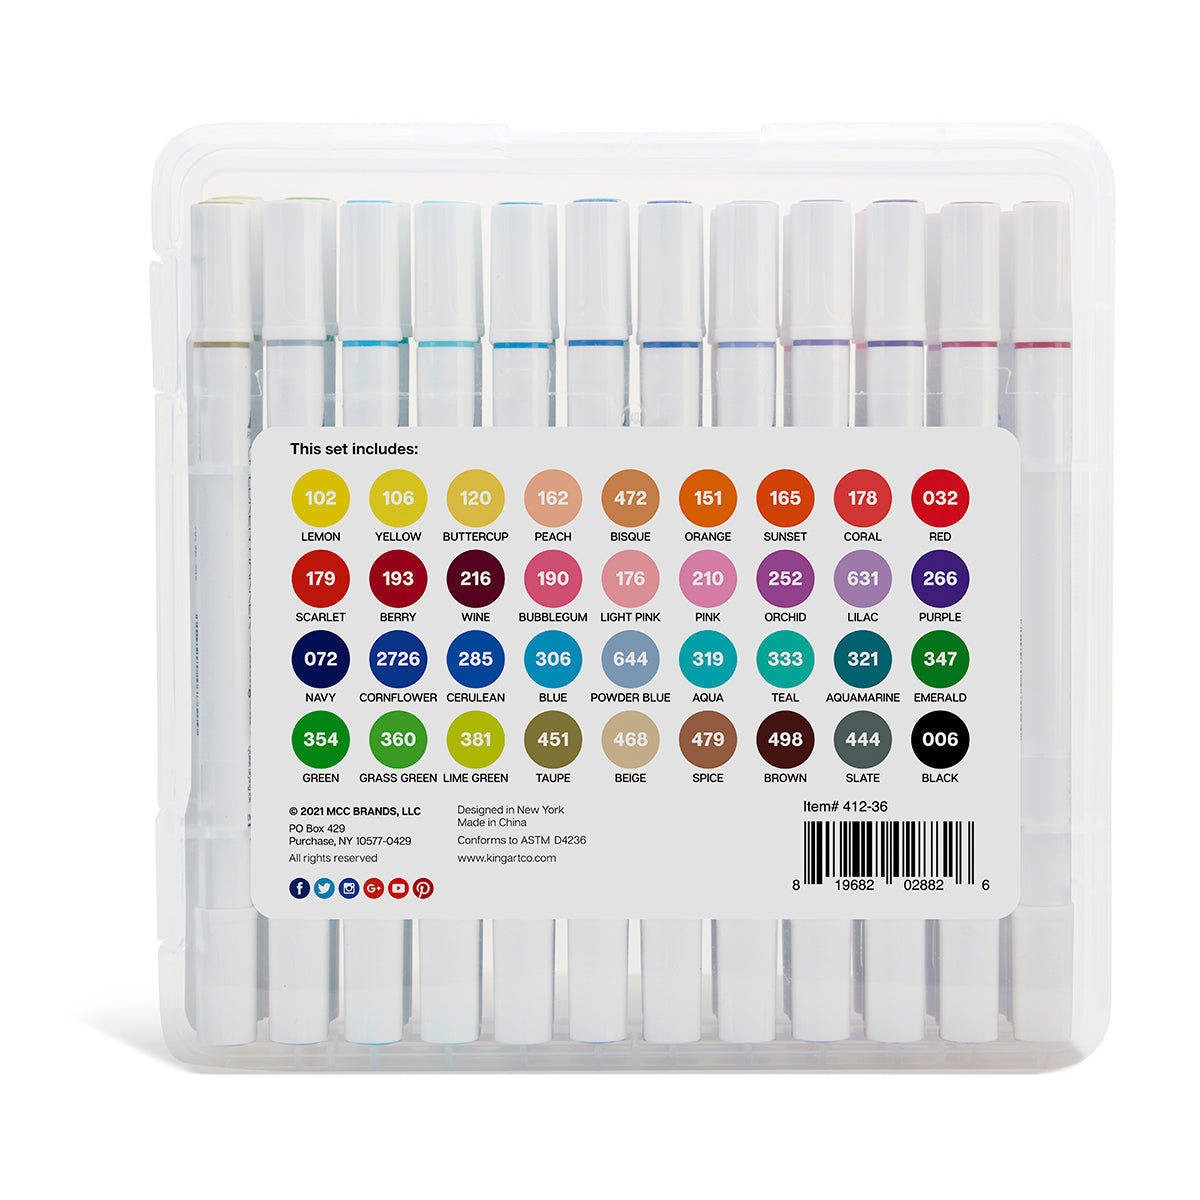 KINGART® Twin-Tip™ Sketch Markers, Set of 60 Unique & Vivid Colors